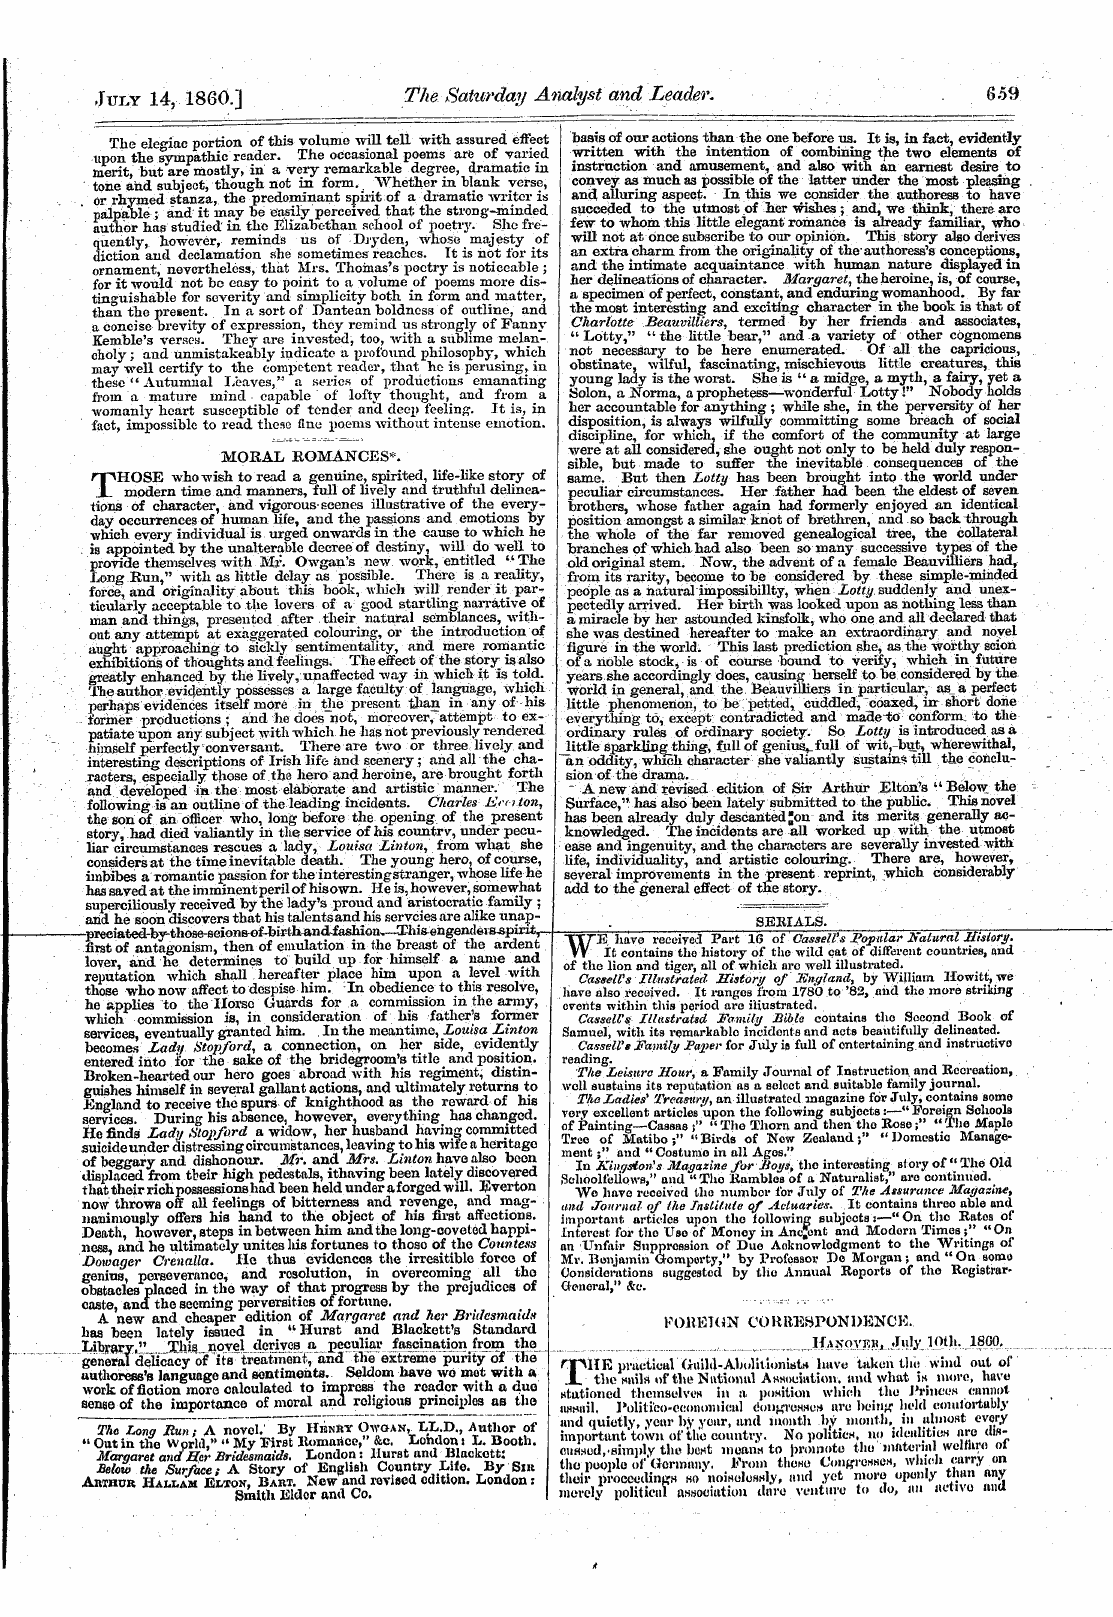 Leader (1850-1860): jS F Y, 1st edition - Mobal Romances*.